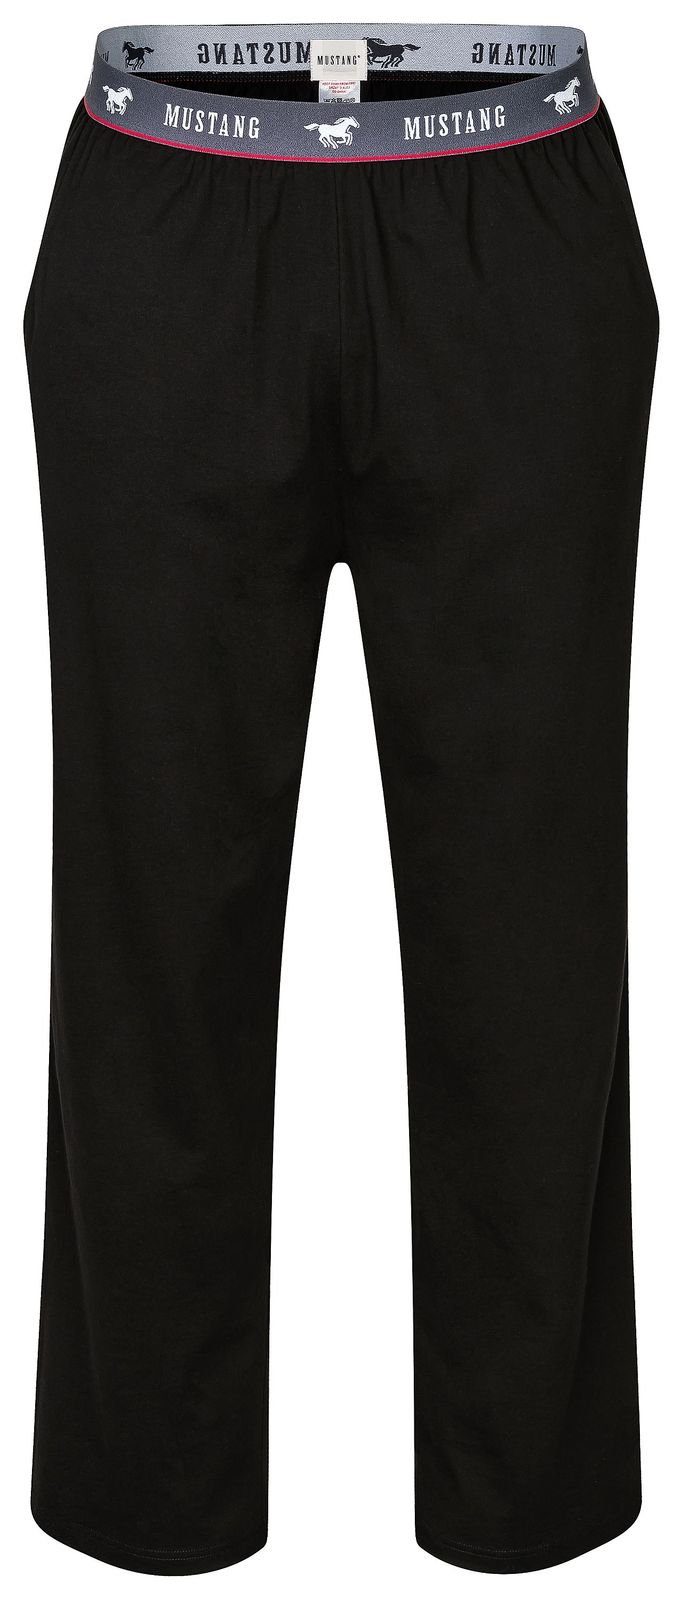 MUSTANG Loungepants Long Pants Lounge roter schwarz Hose Kontraststreifen und Trousers Freizeithose Mustangbranding